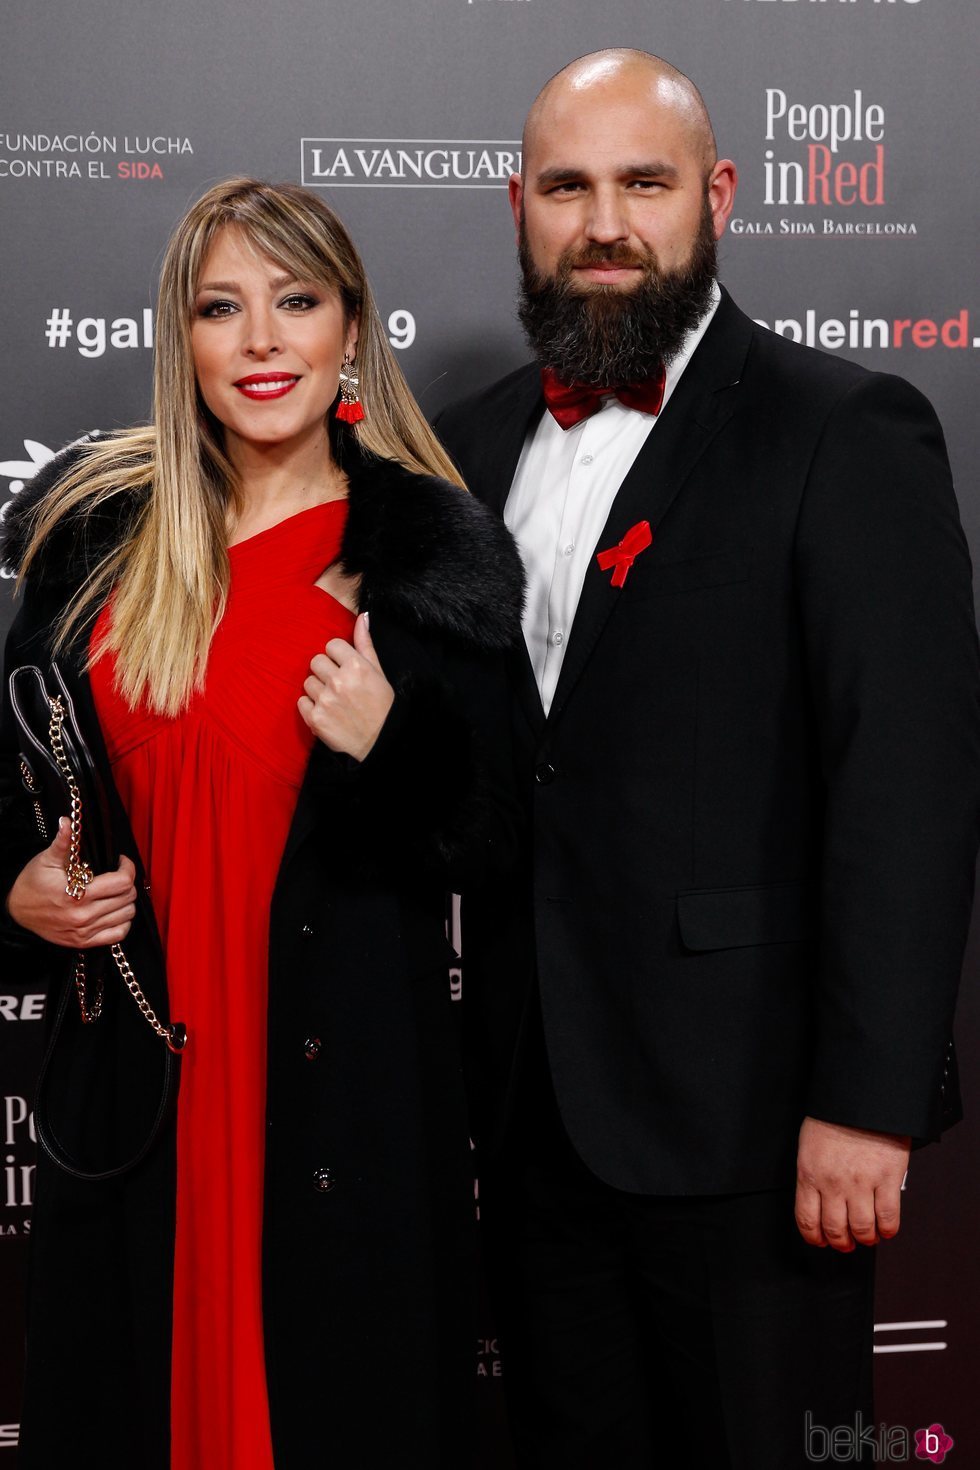 Gisela y su pareja en la gala People in Red 2019